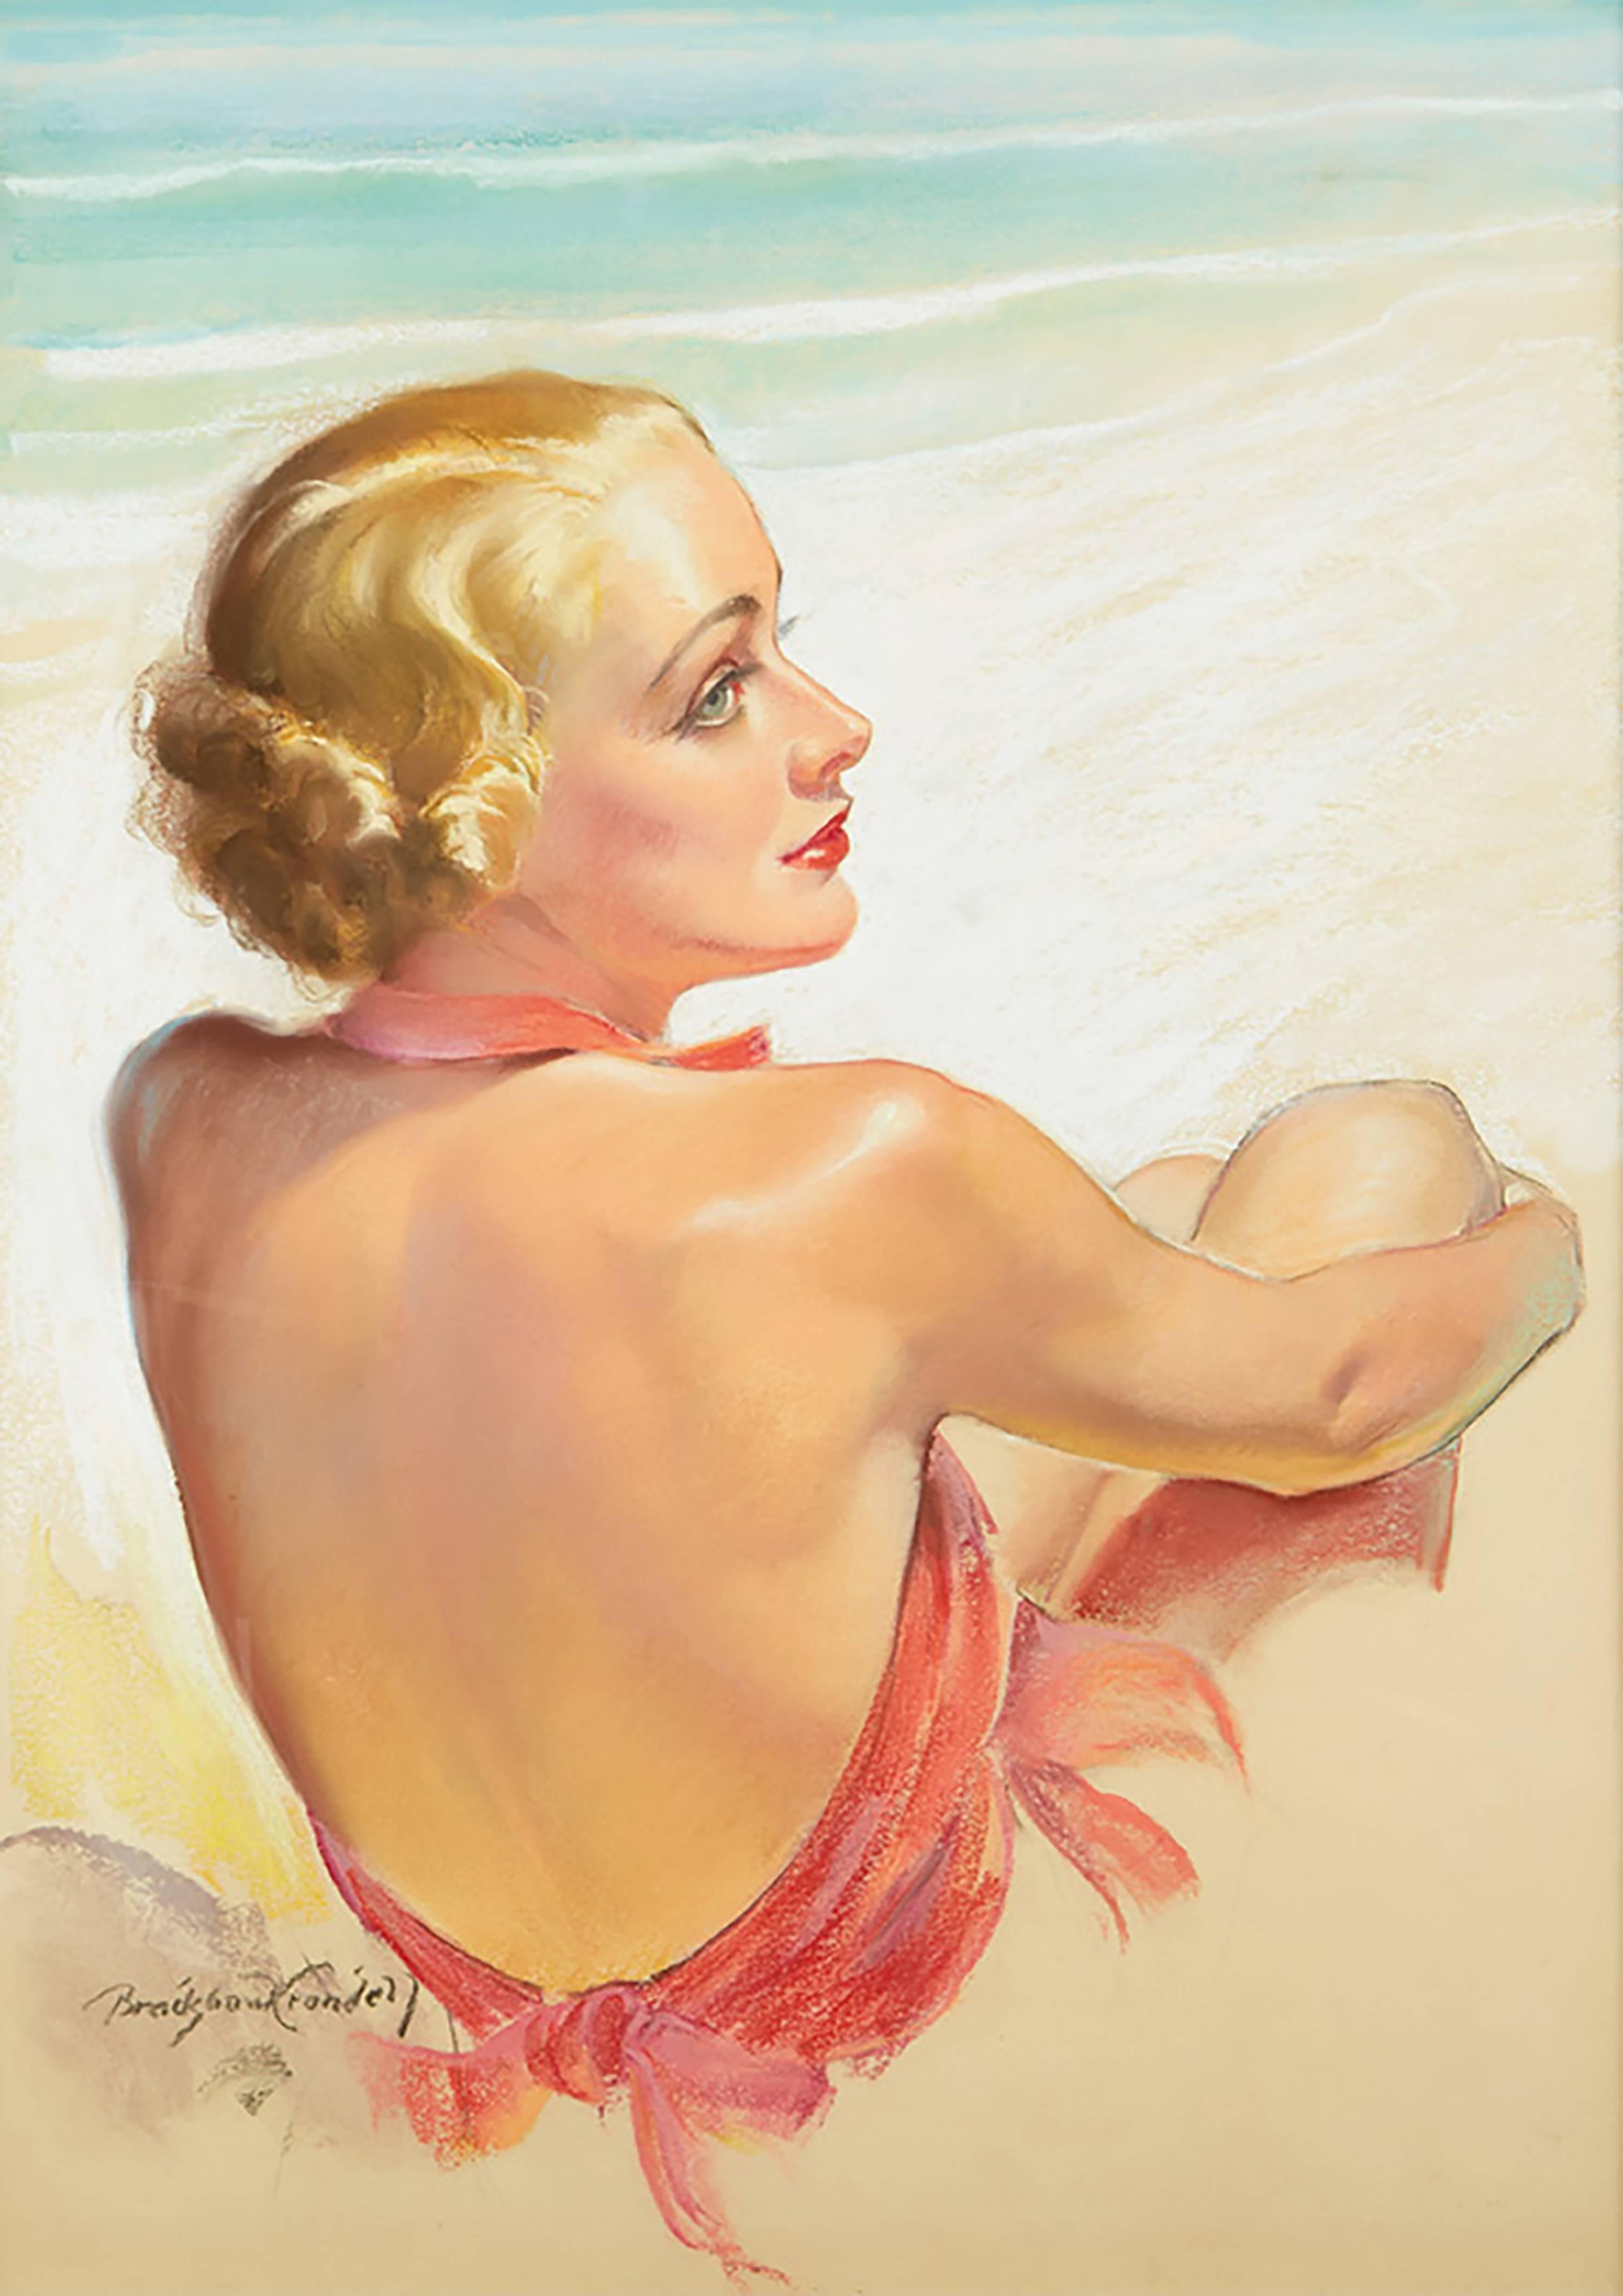 Bradshaw Crandell Portrait - Bathing Beauty (Carole Lombard)